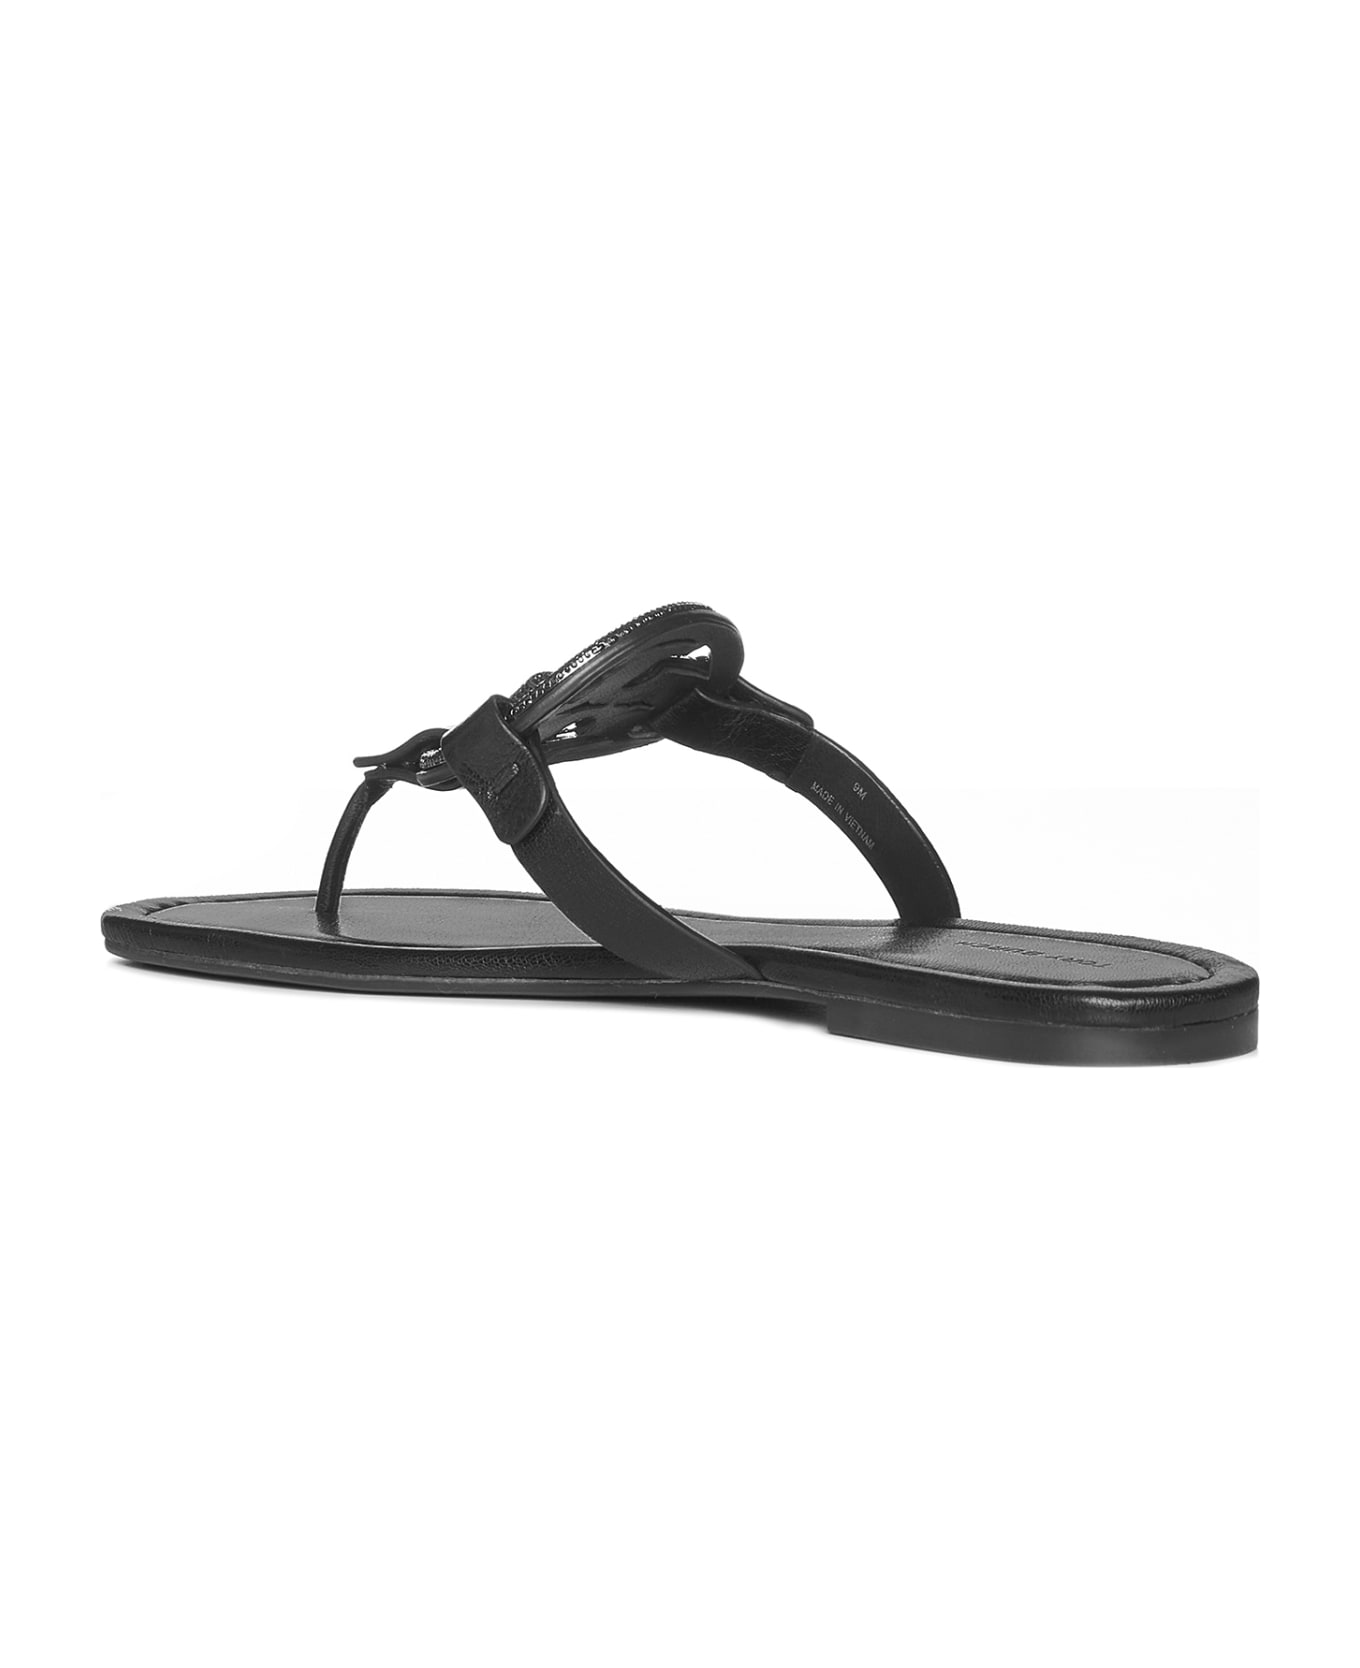 Tory Burch Sandals - Perfect black